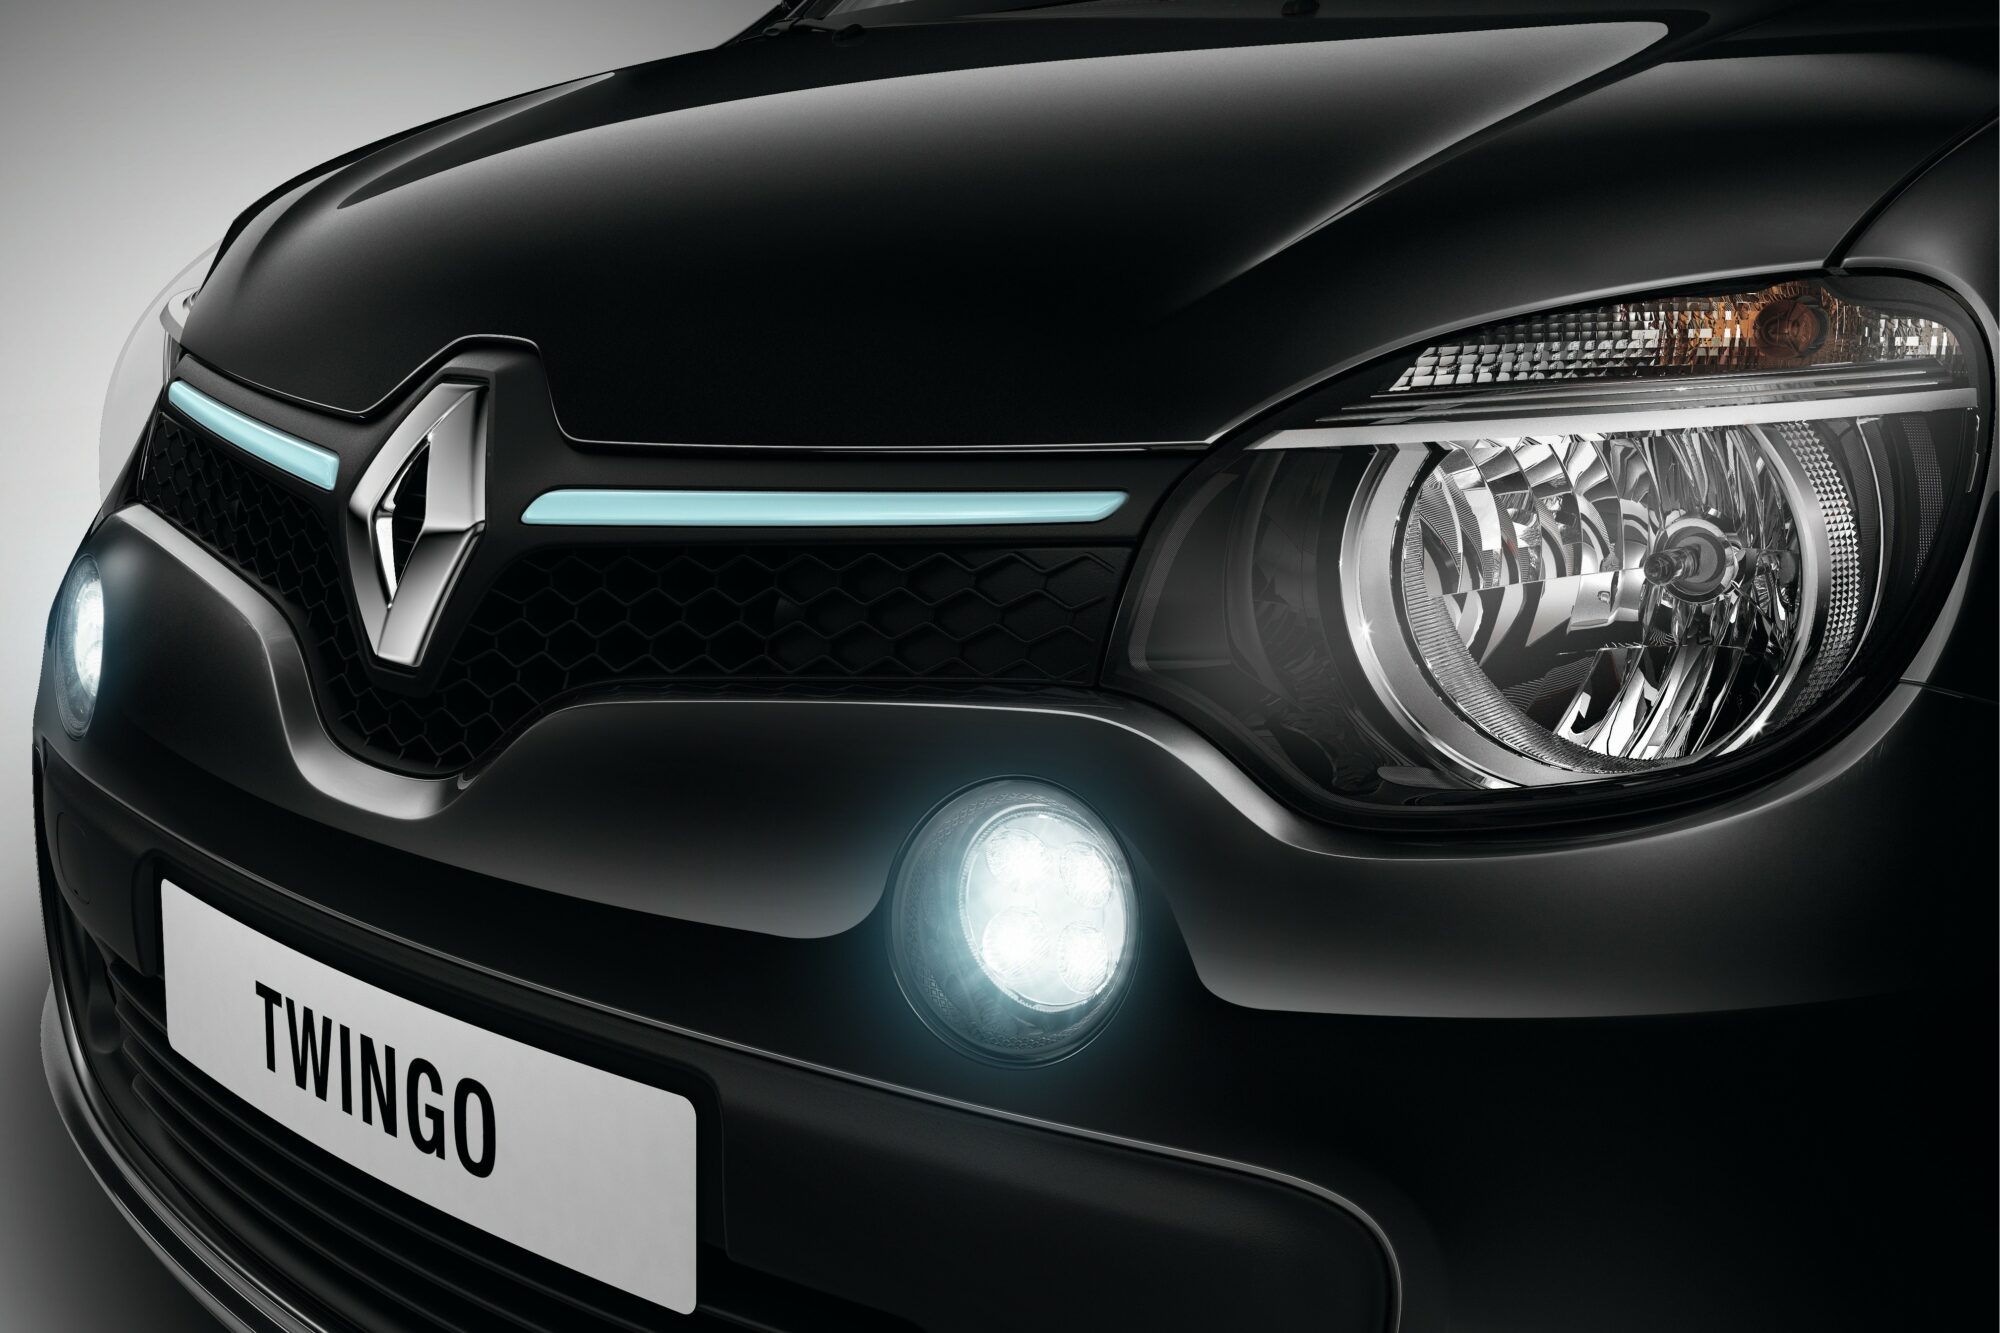 2014 - Nuova Renault Twingo